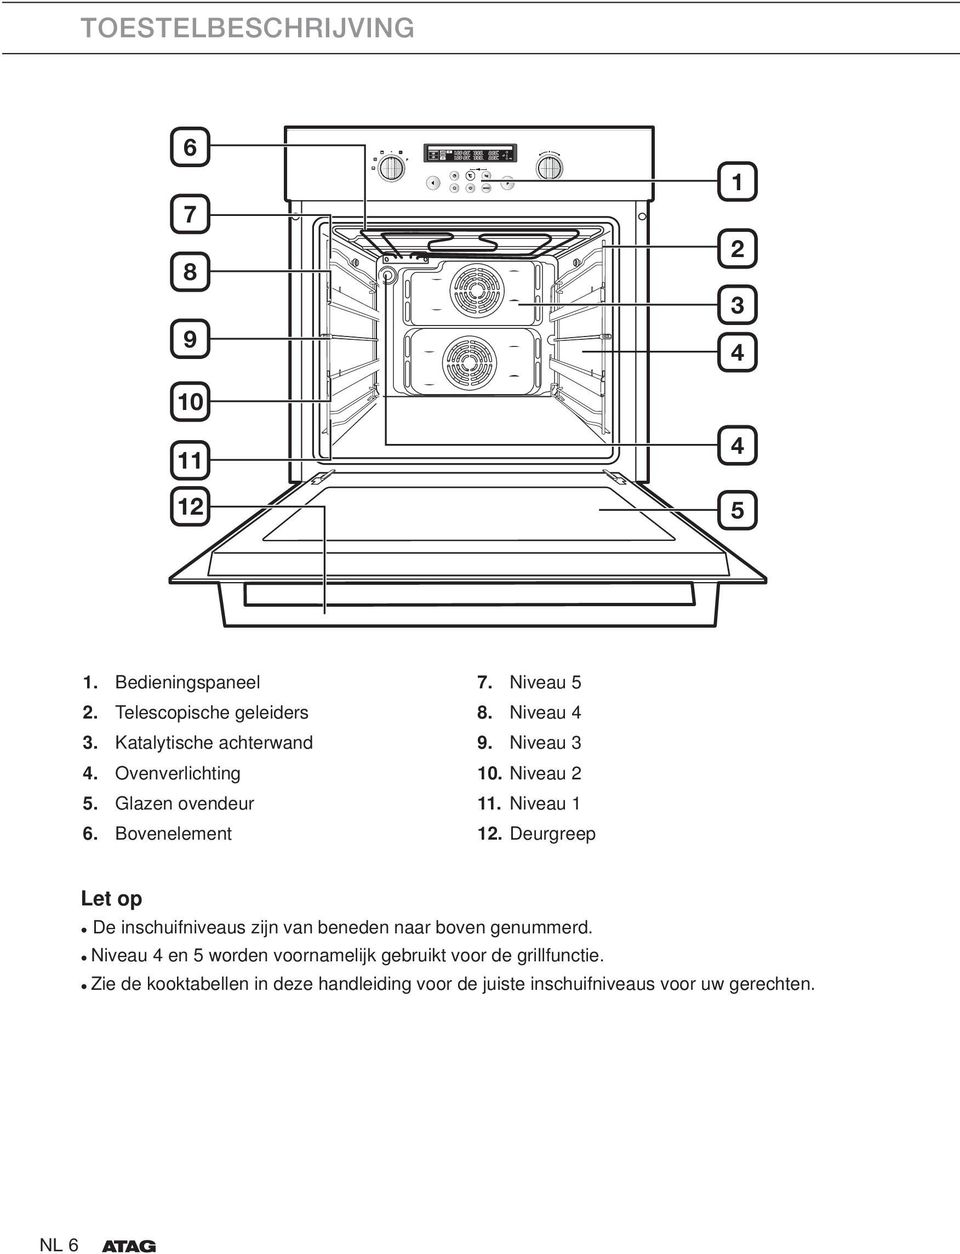 Gebruiksaanwijzing Oven - PDF Free Download